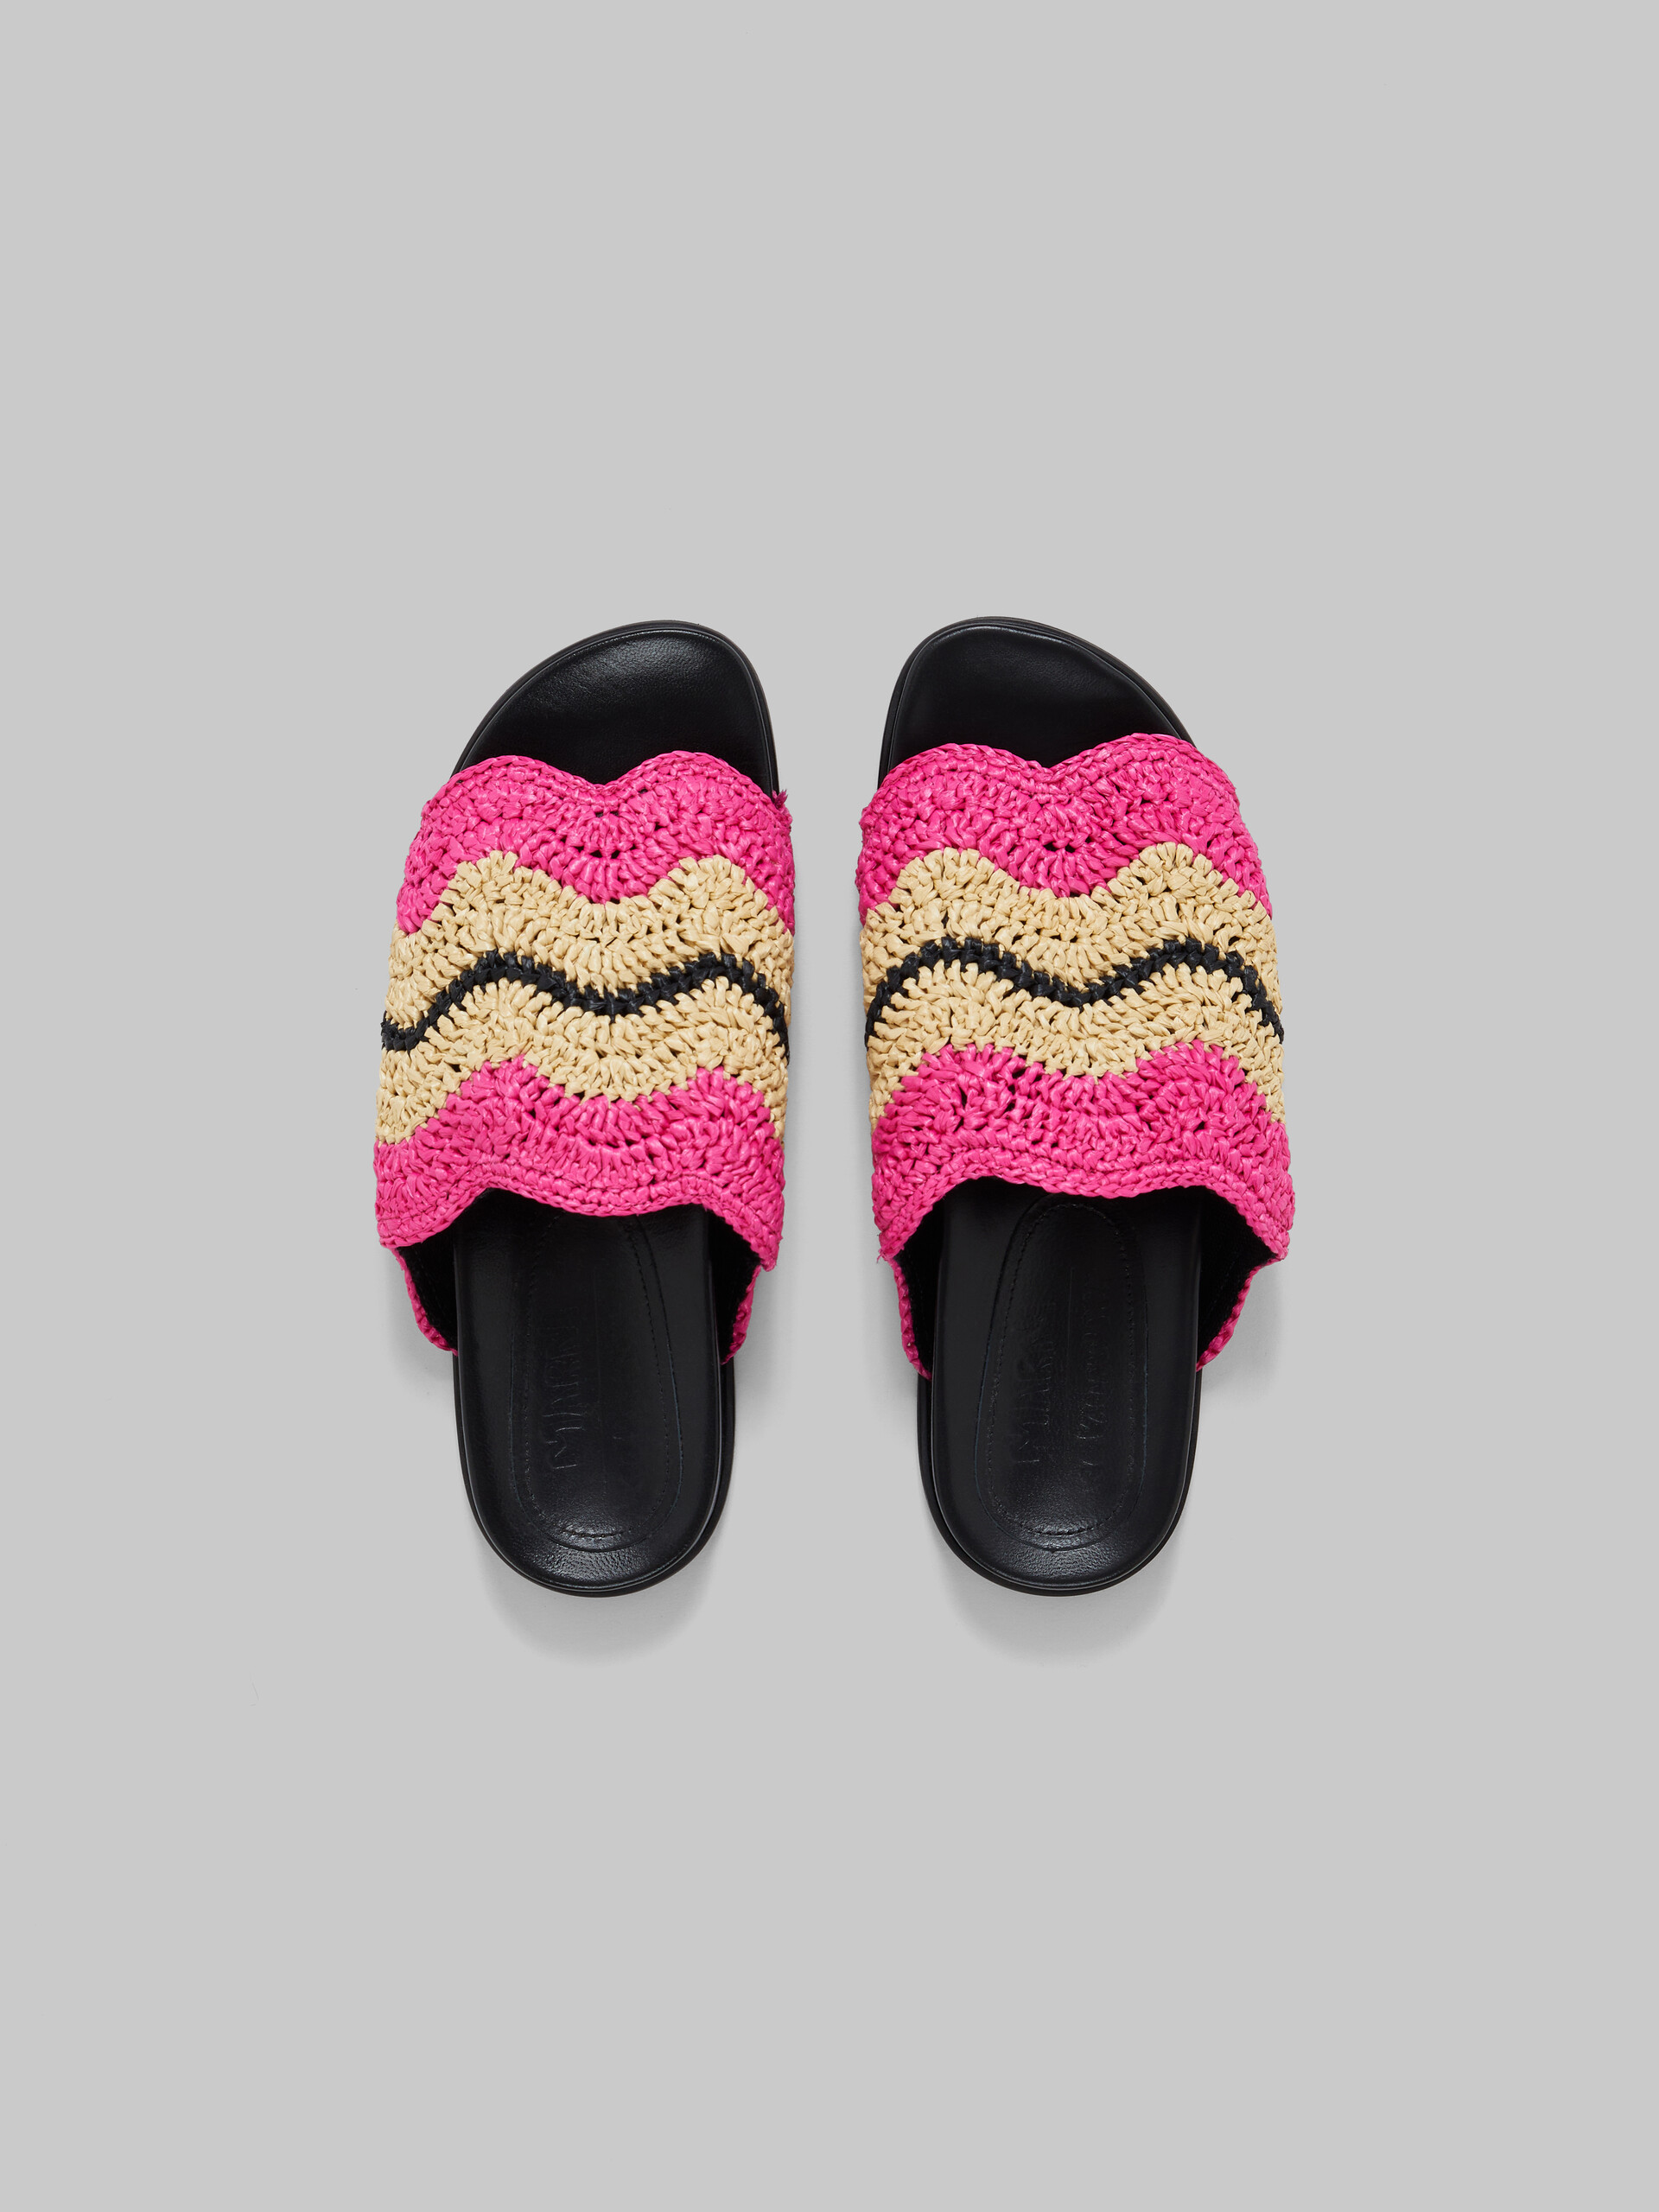 Marni x No Vacancy Inn - Fuchsia crochet raffia slide - Sandals - Image 4